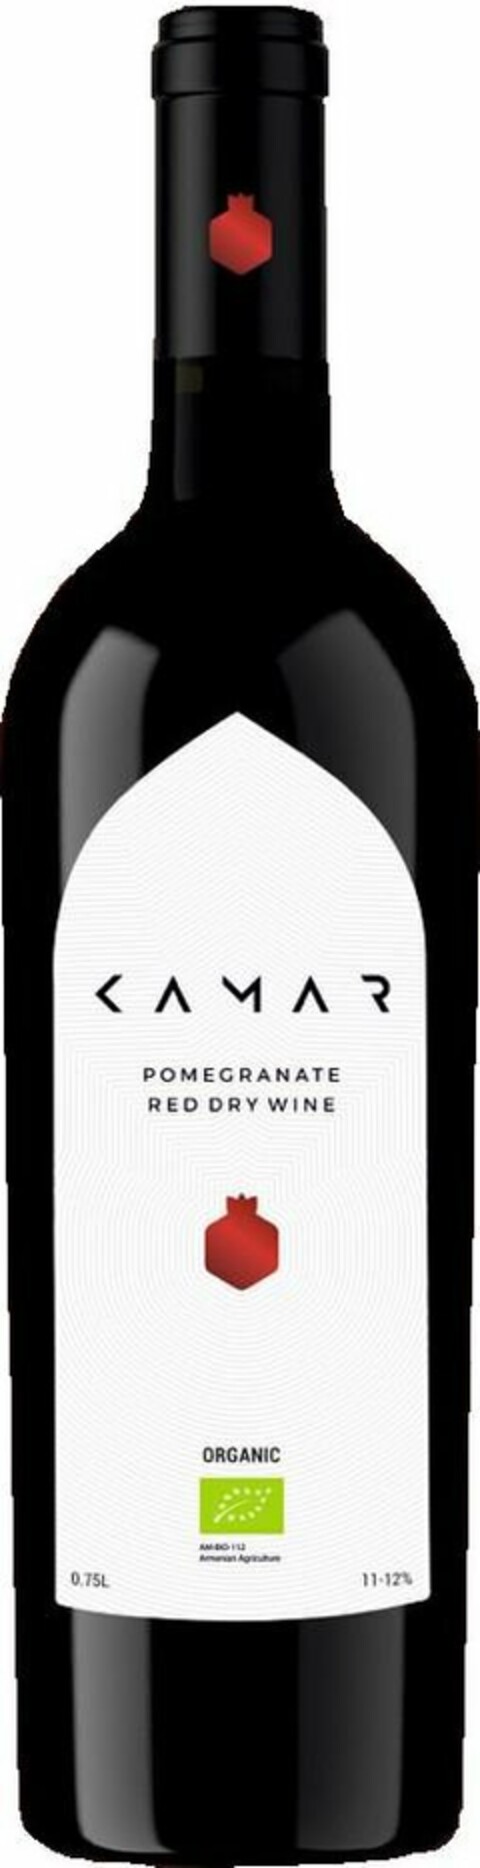 KAMAR POMEGRANATE RED DRY WINE ORGANIC Logo (USPTO, 09.01.2019)